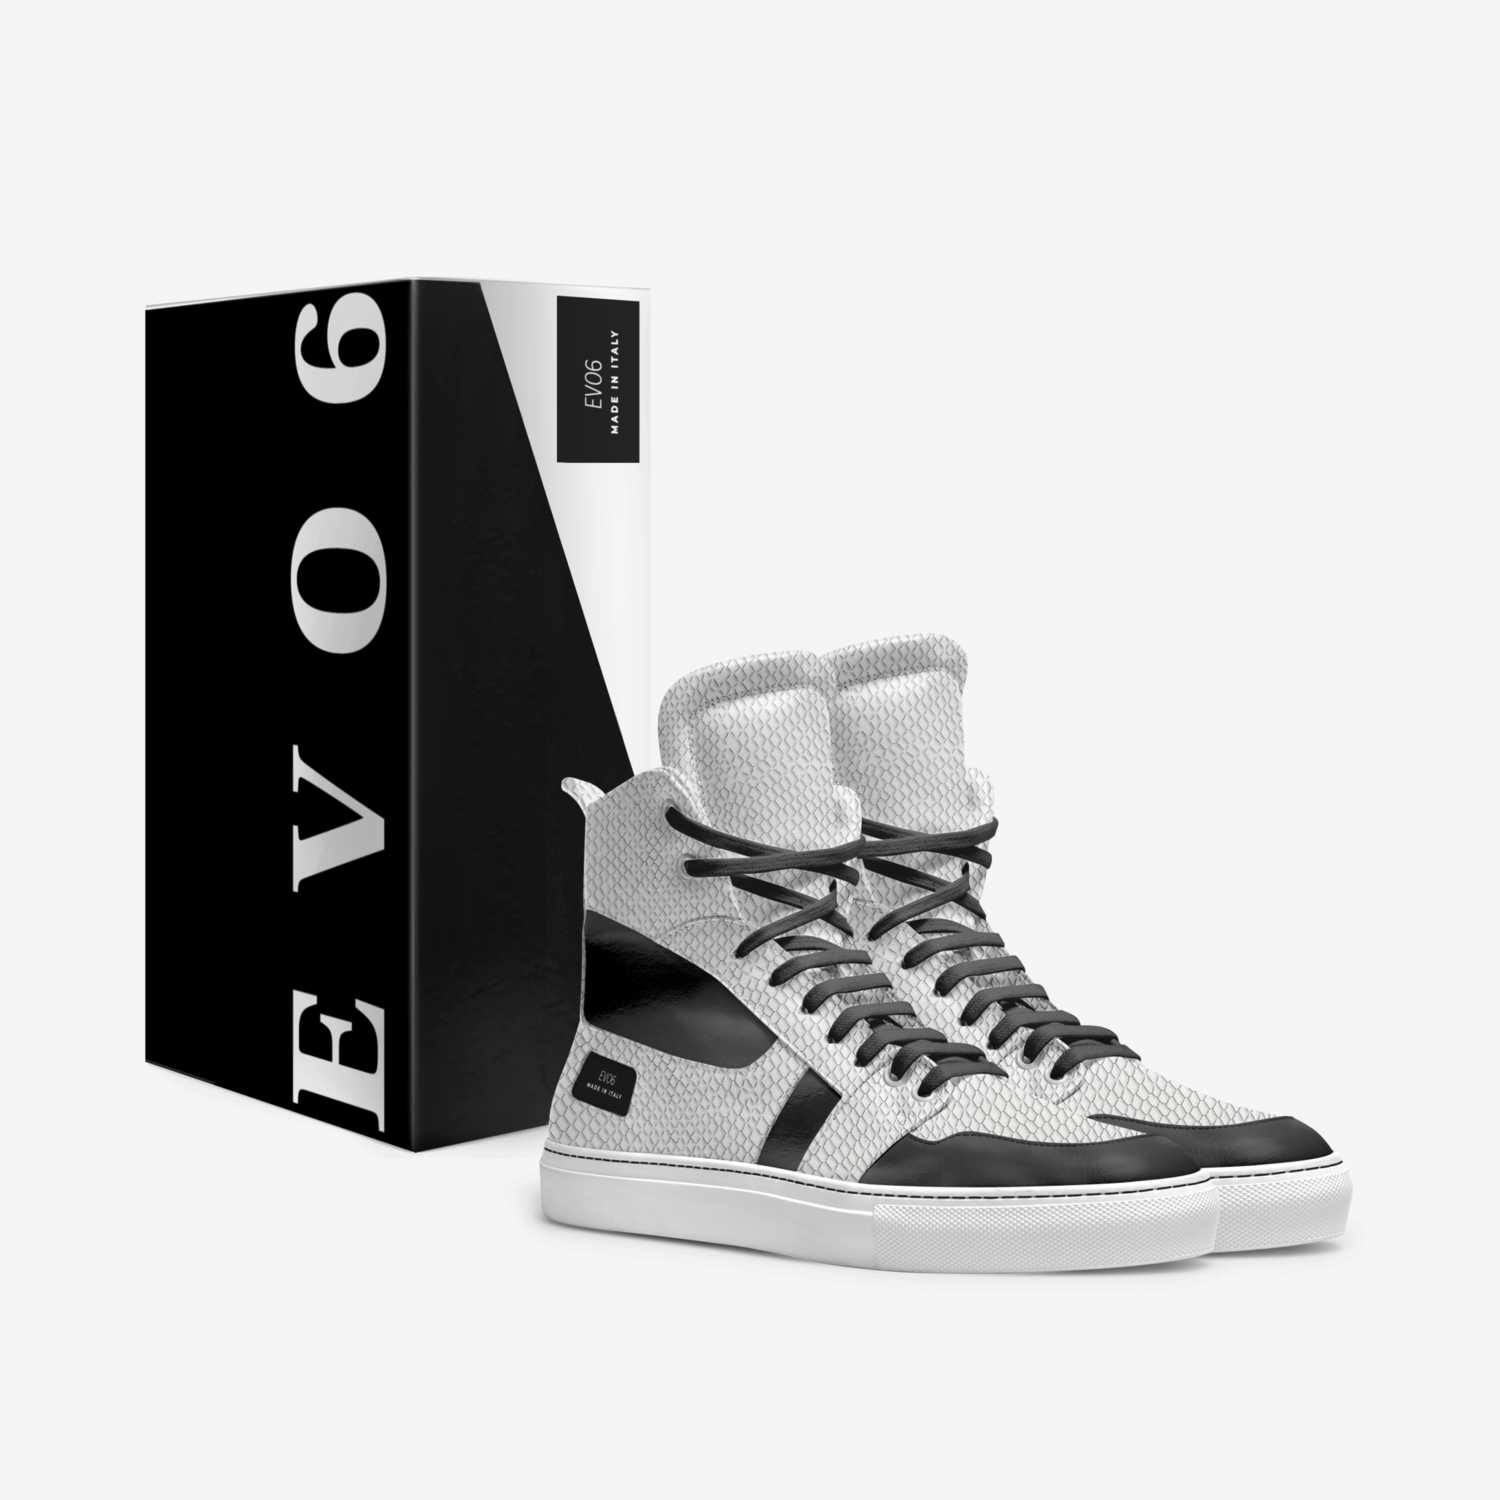 EVO6  custom made in Italy shoes by Akini Furlonge | Box view